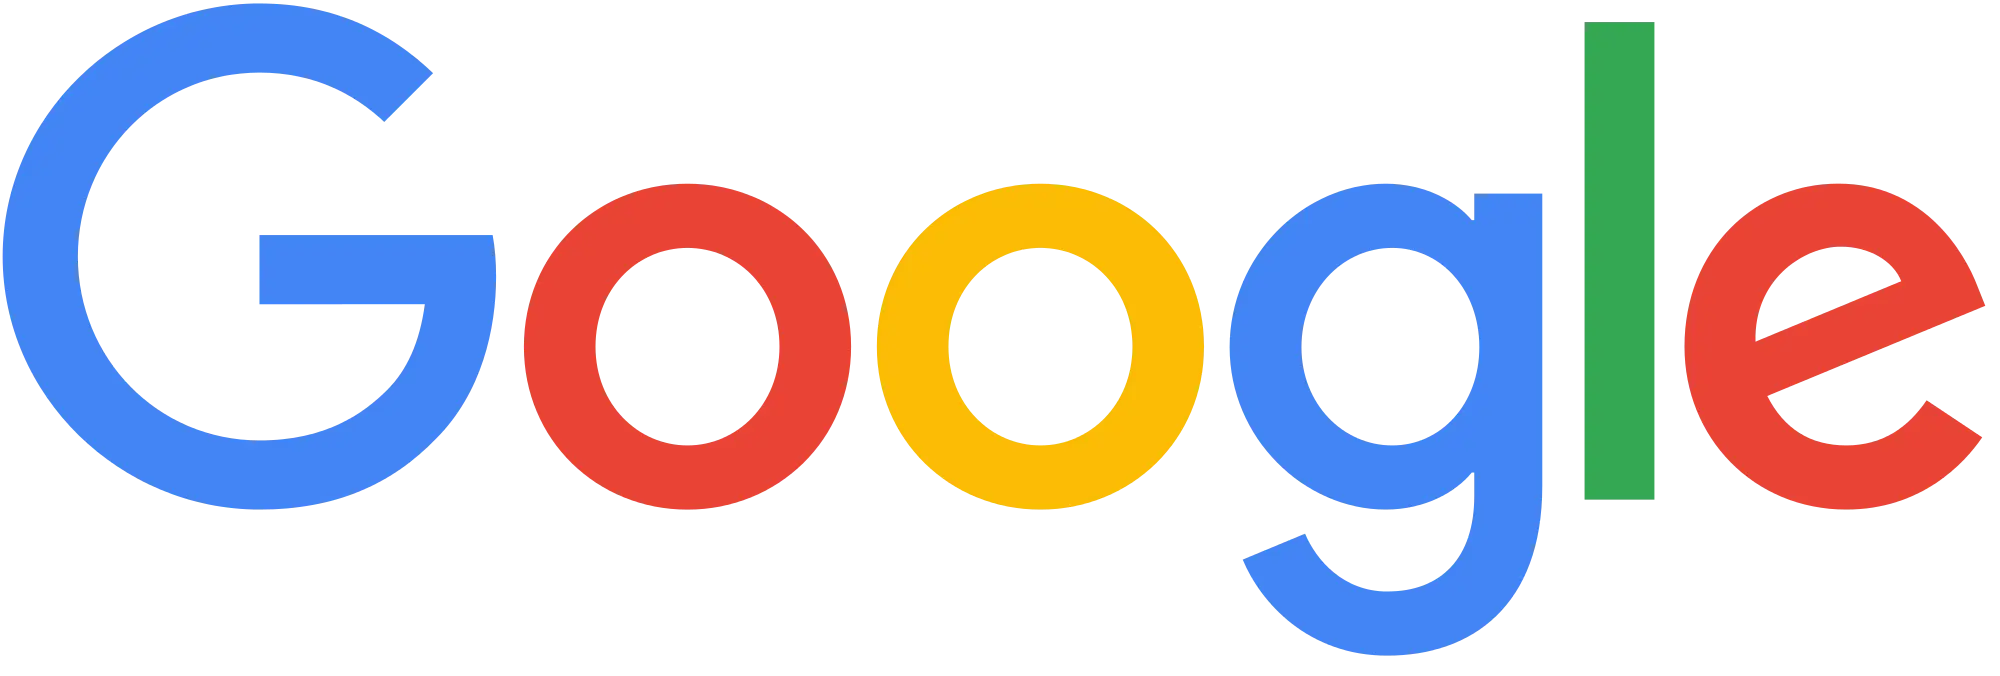 Google Cloud Identity logo